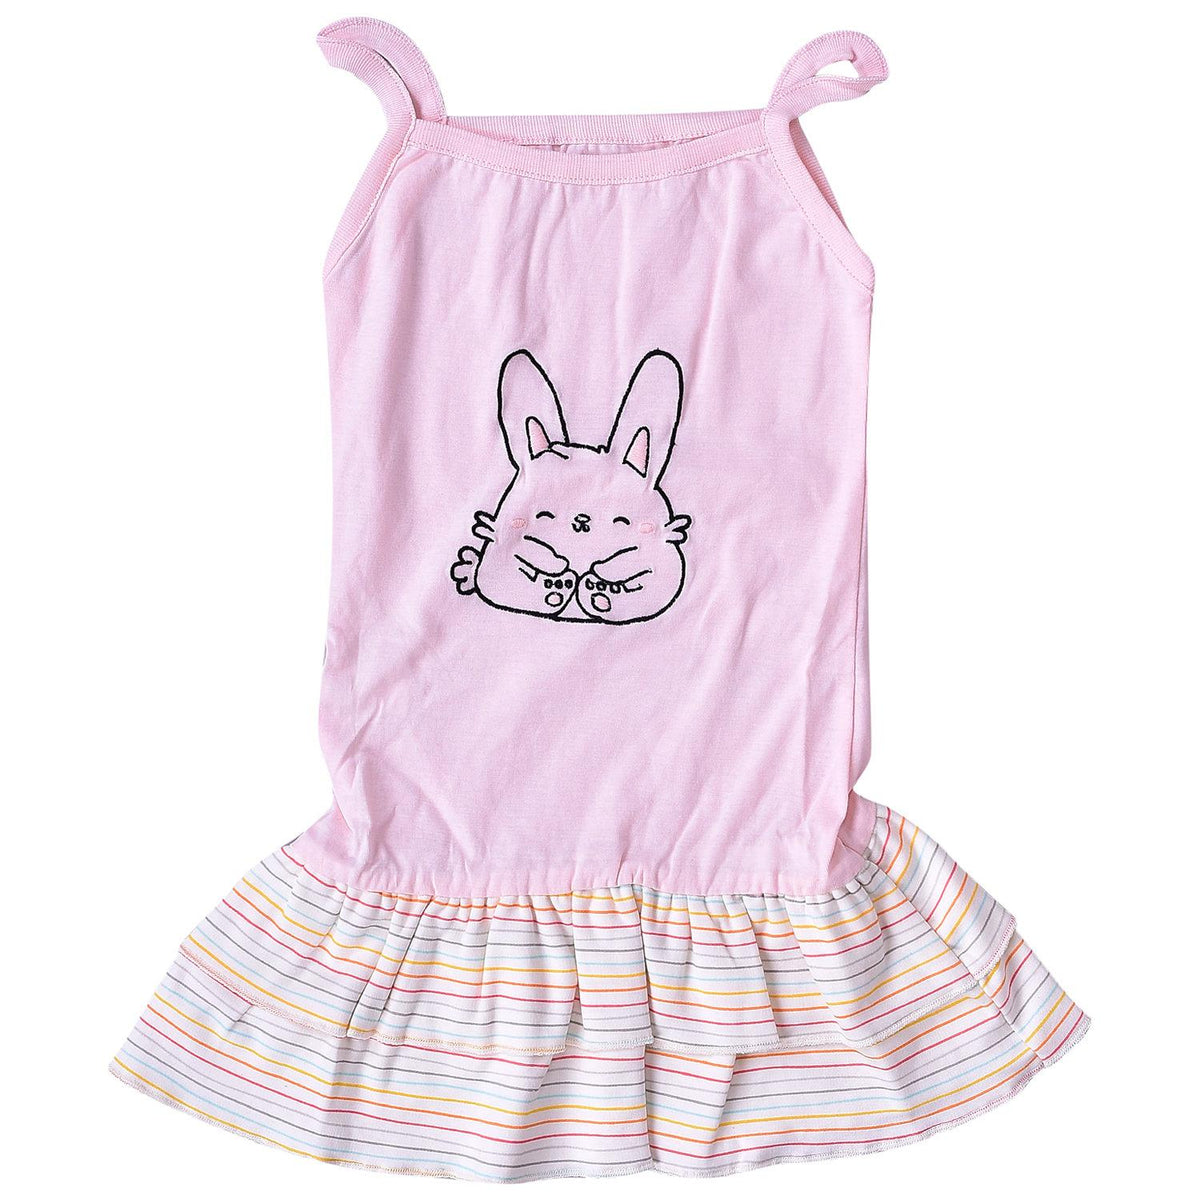 Baby Girls Sleeveless Frock dress - Rabbit